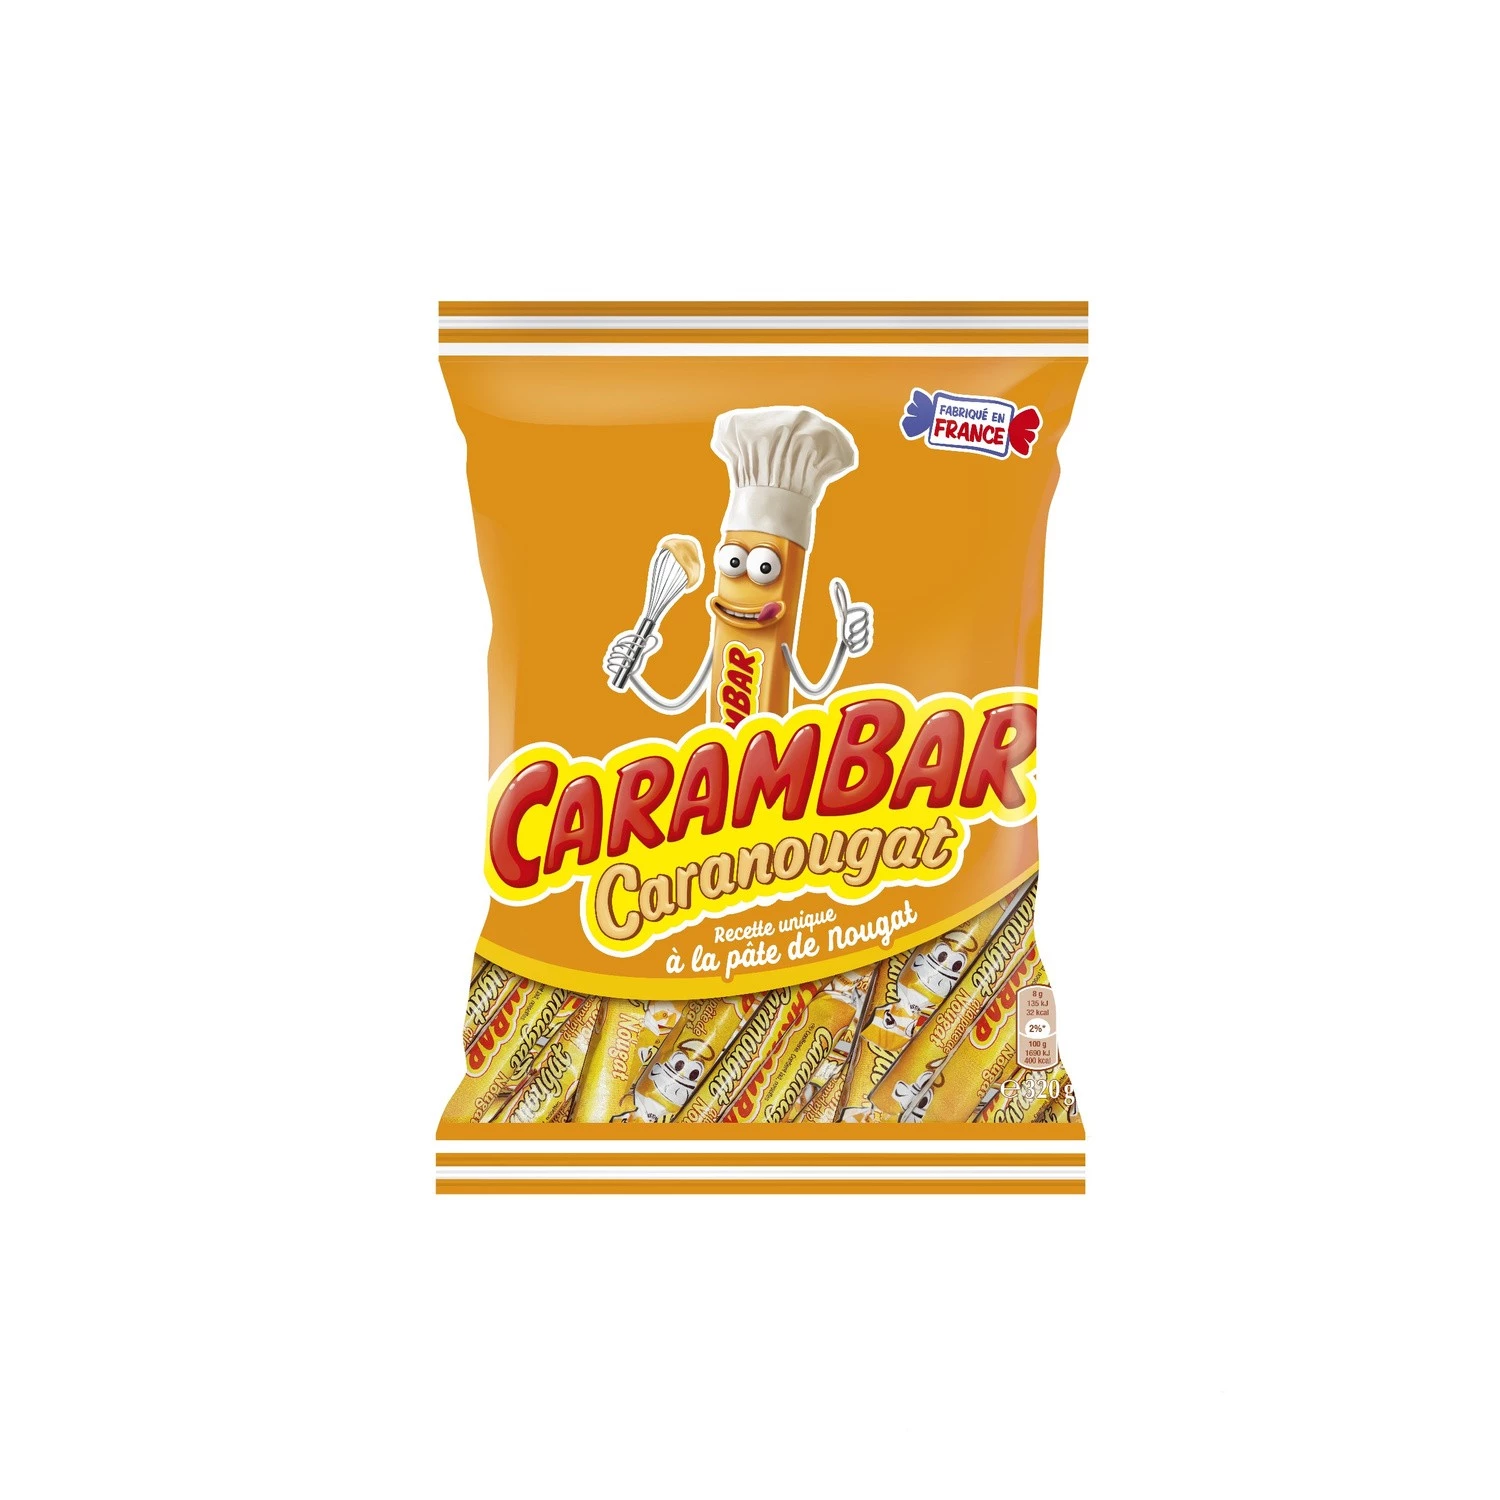 Caranougat 糖果 320g - CARAMBAR